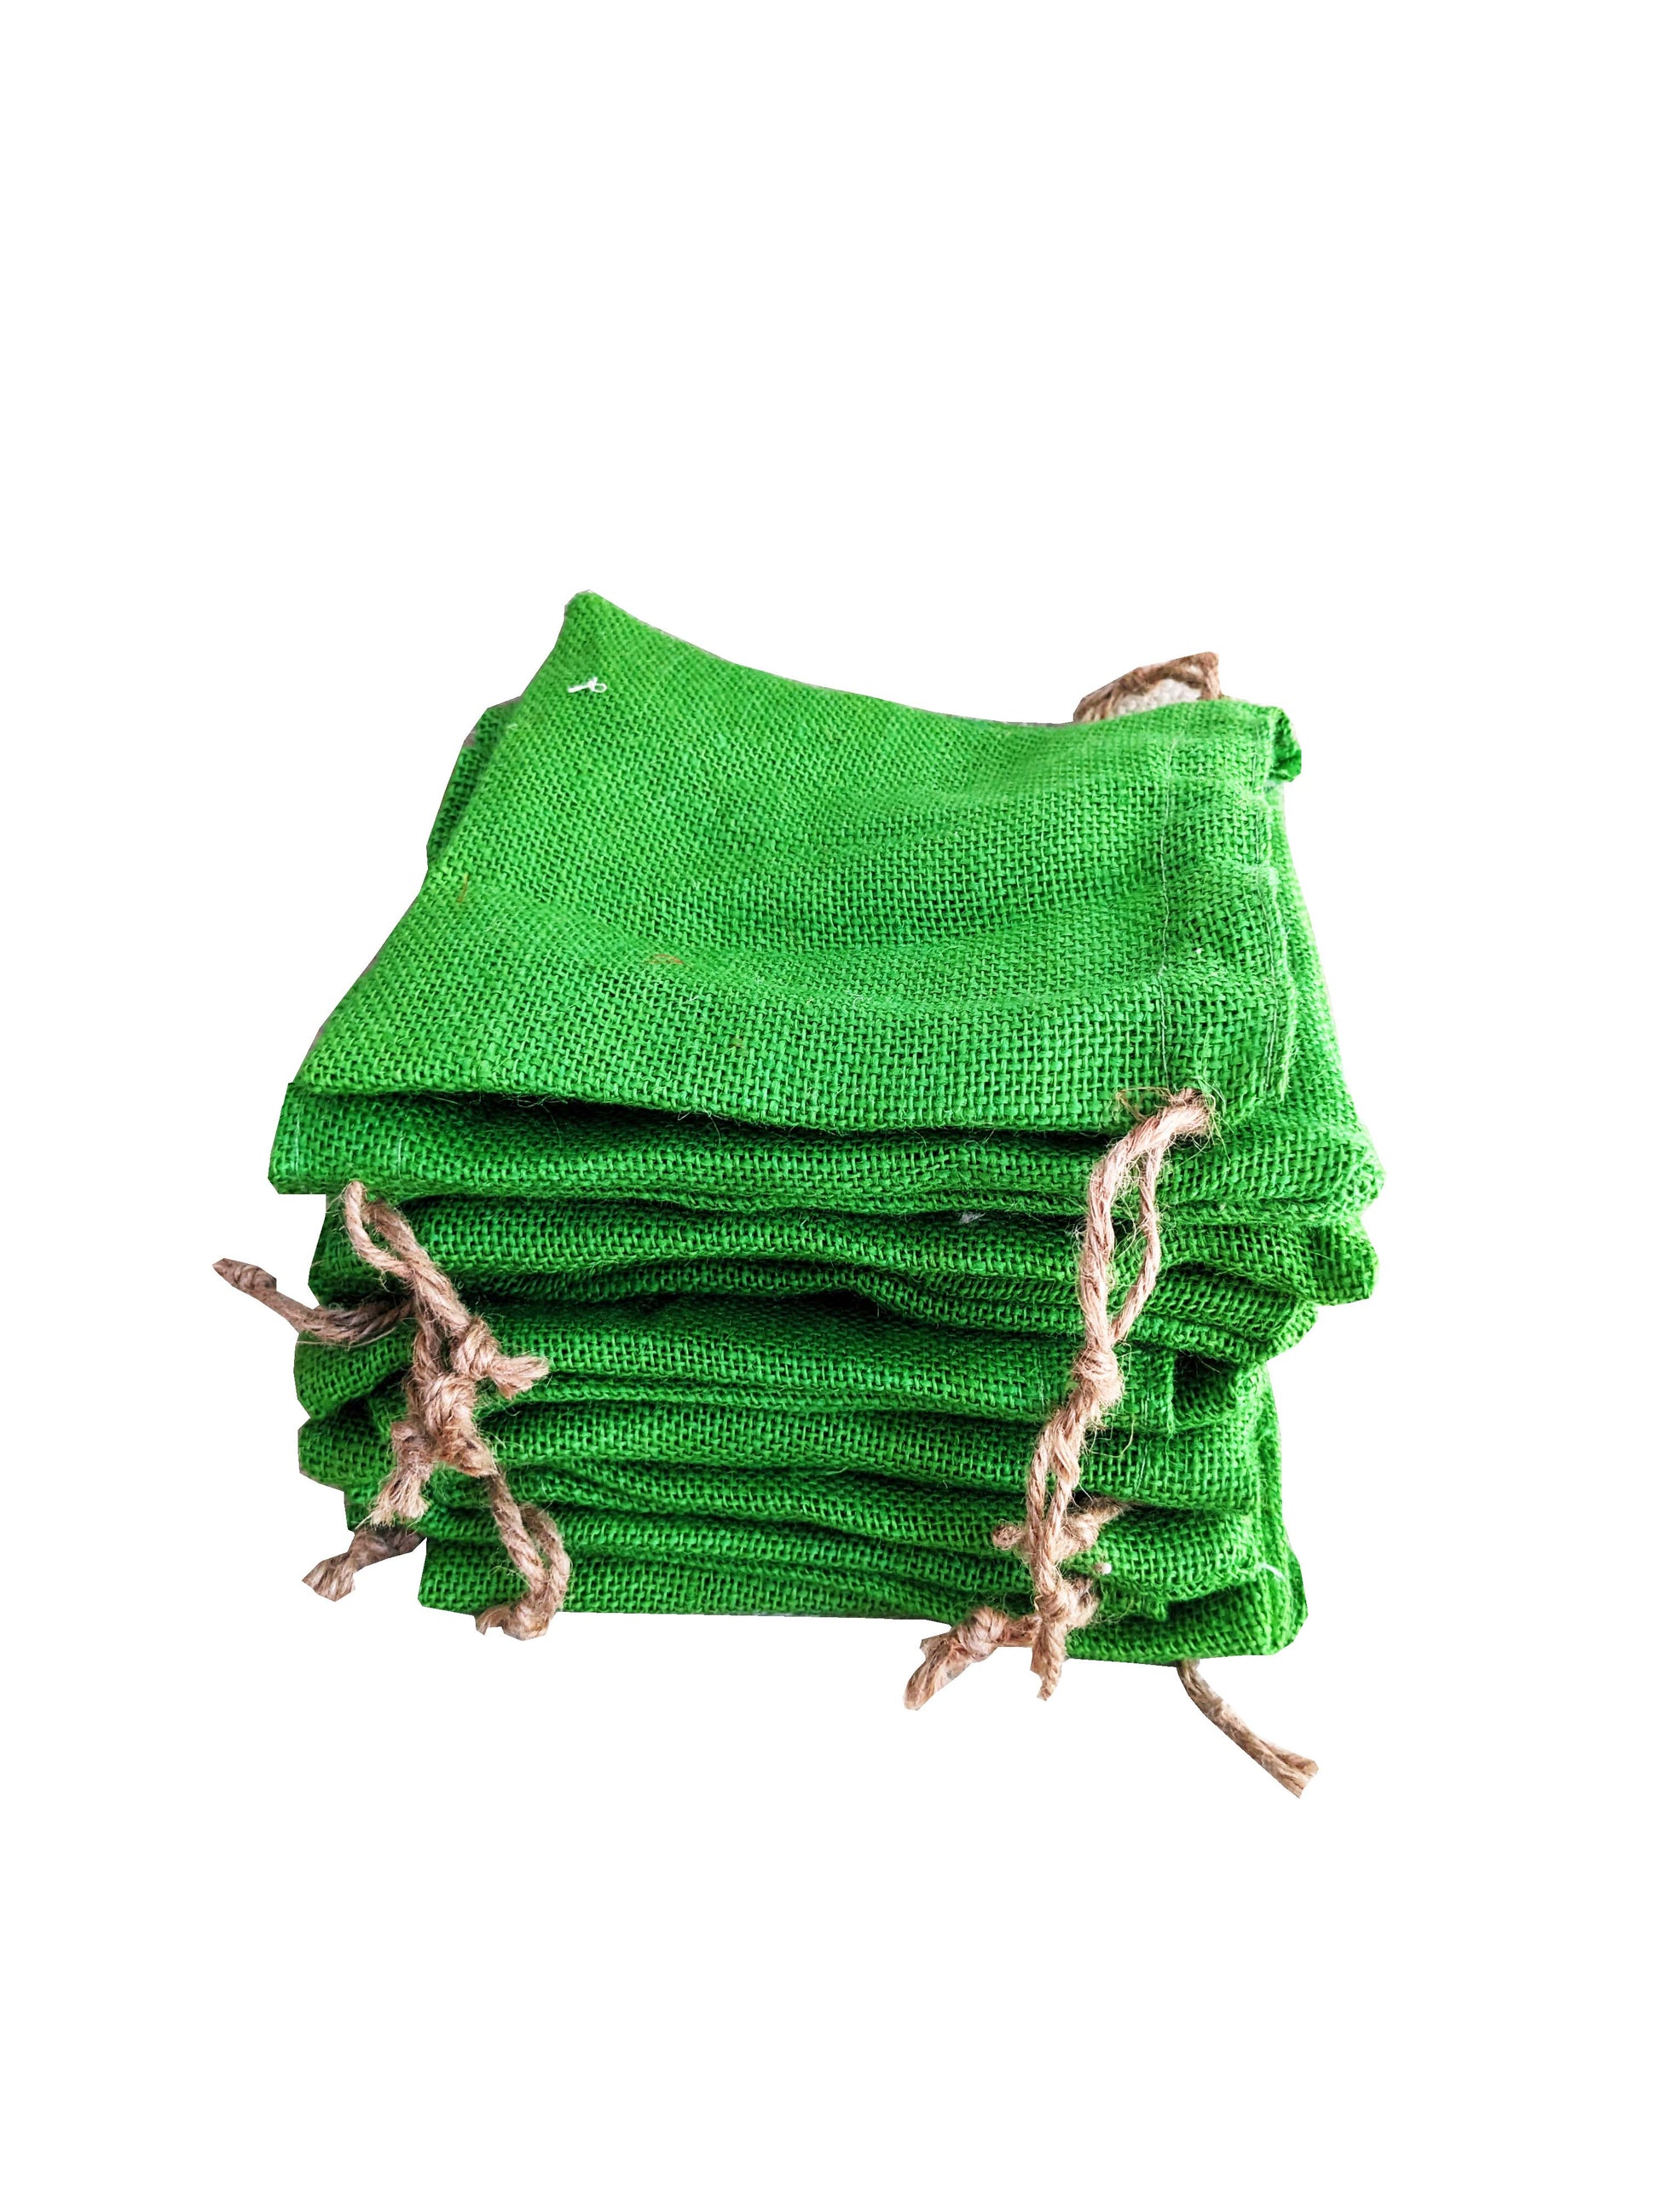 green potli bags